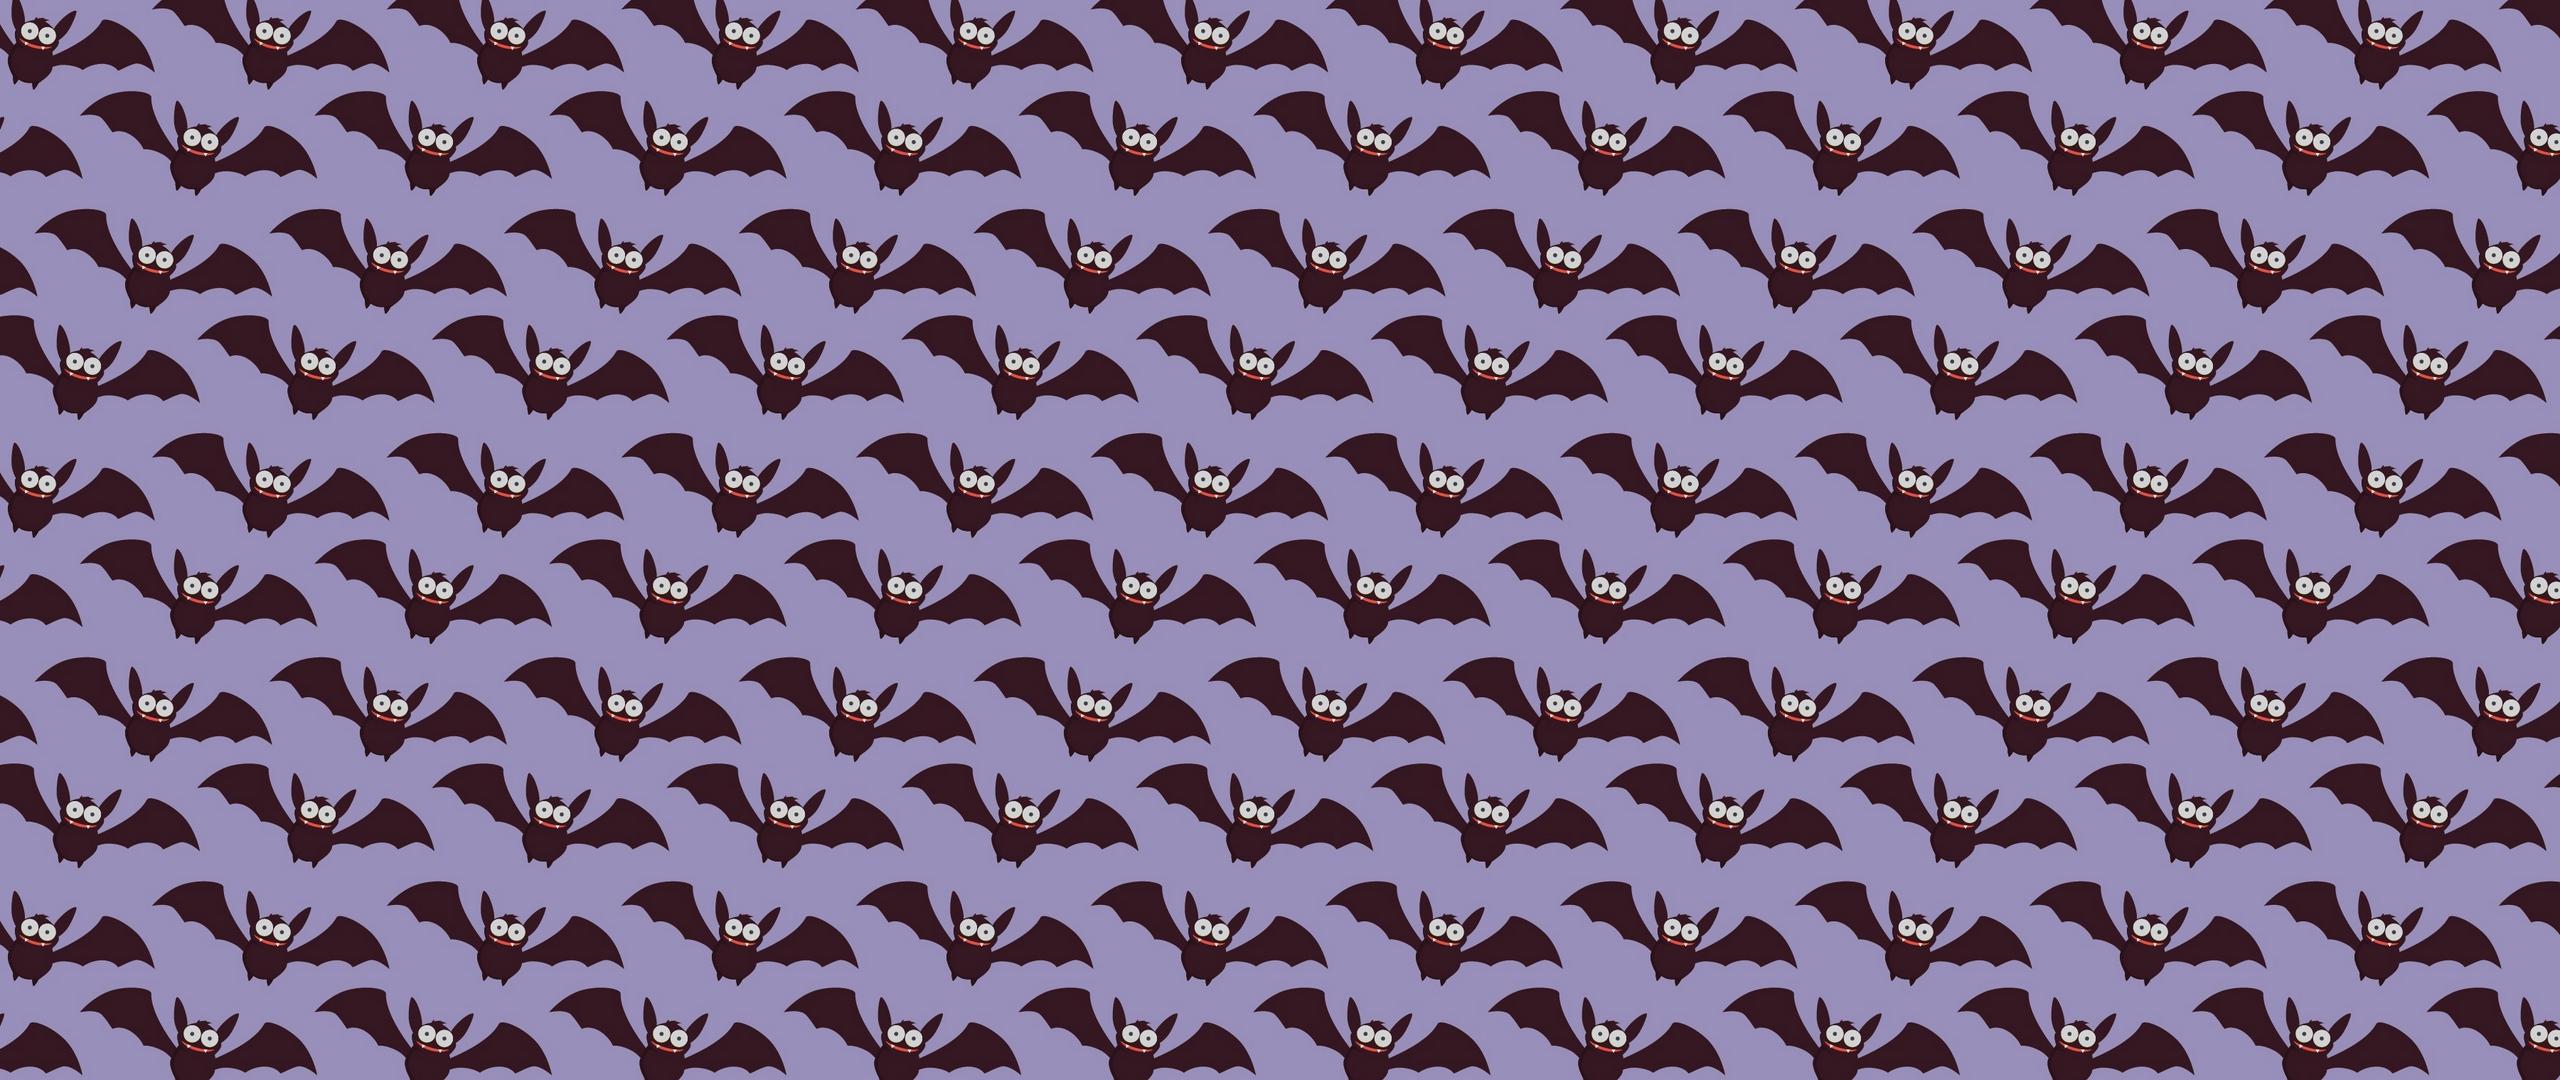 Download wallpaper 2560x1080 bats, halloween, texture dual